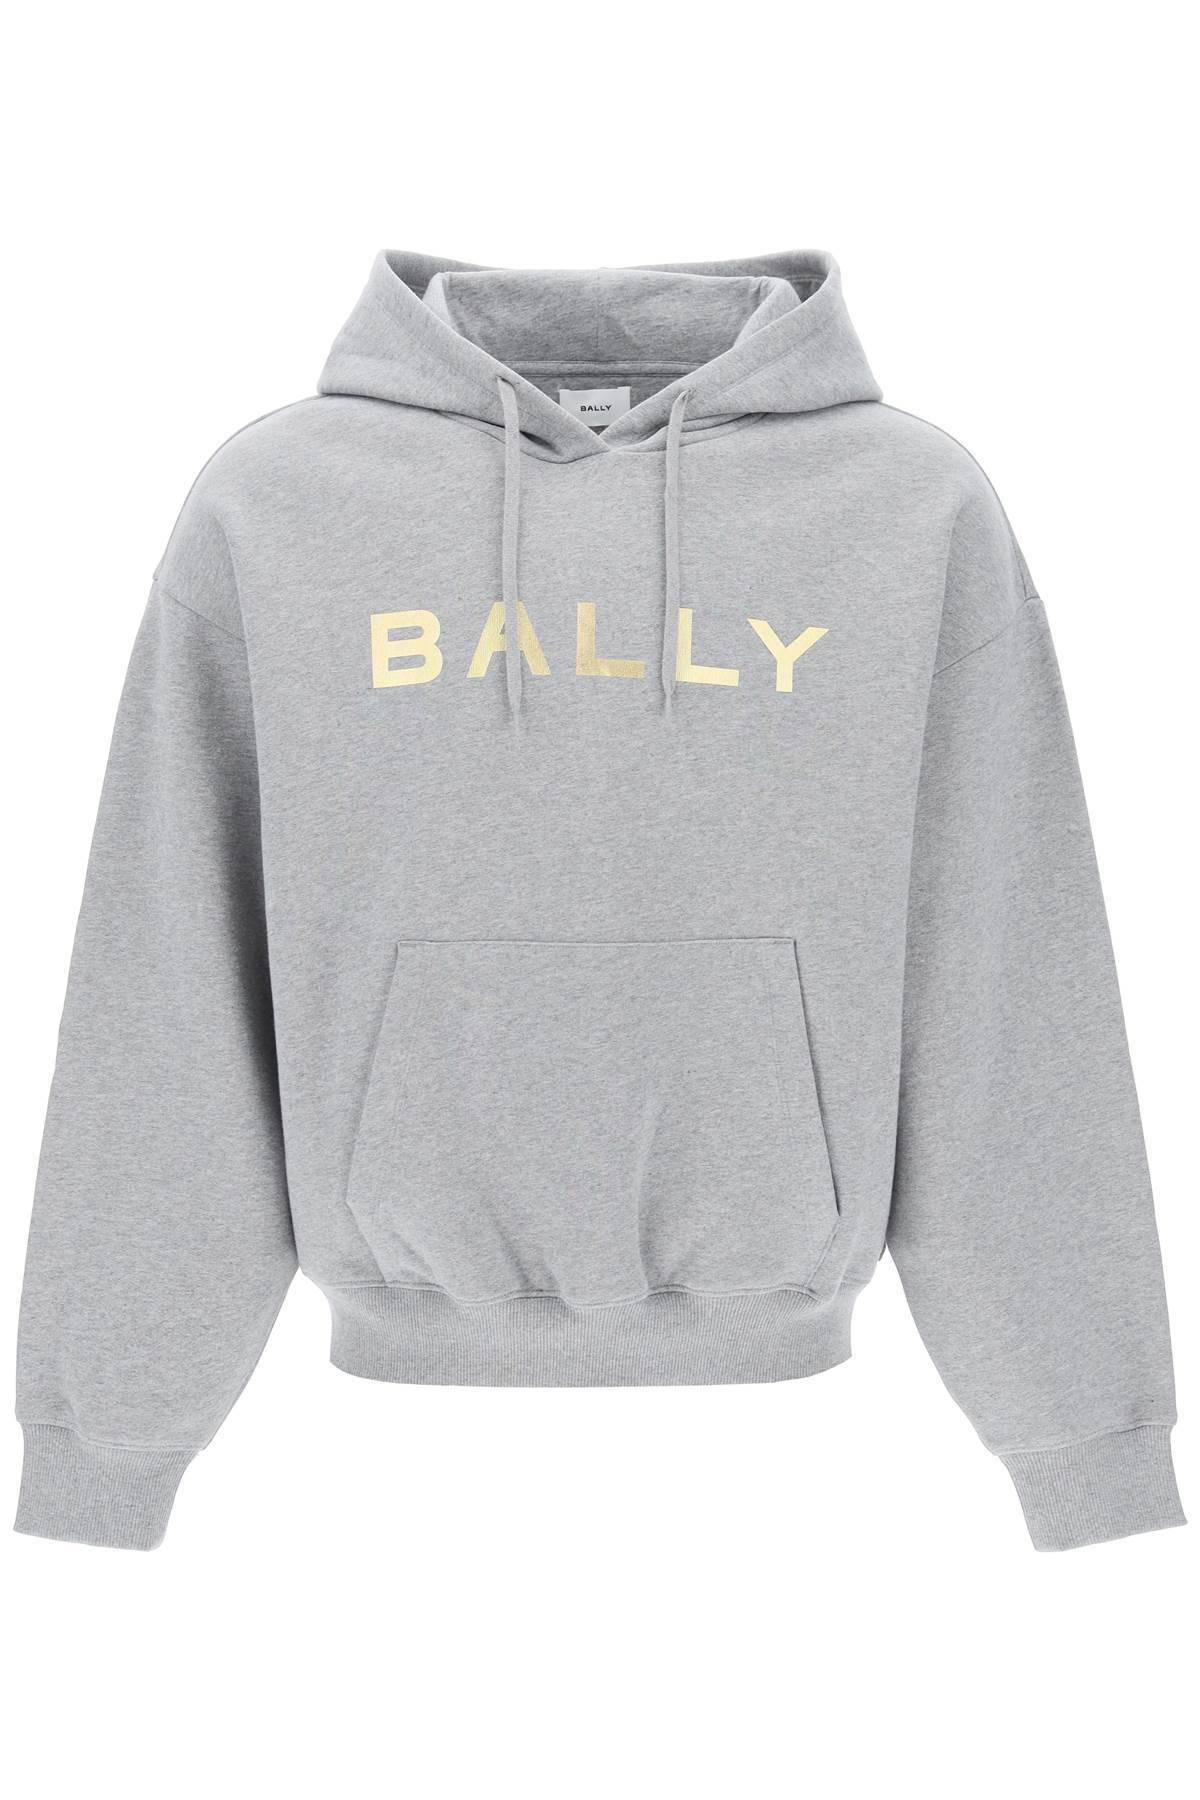 BALLY BALLY metallic logo hoodie